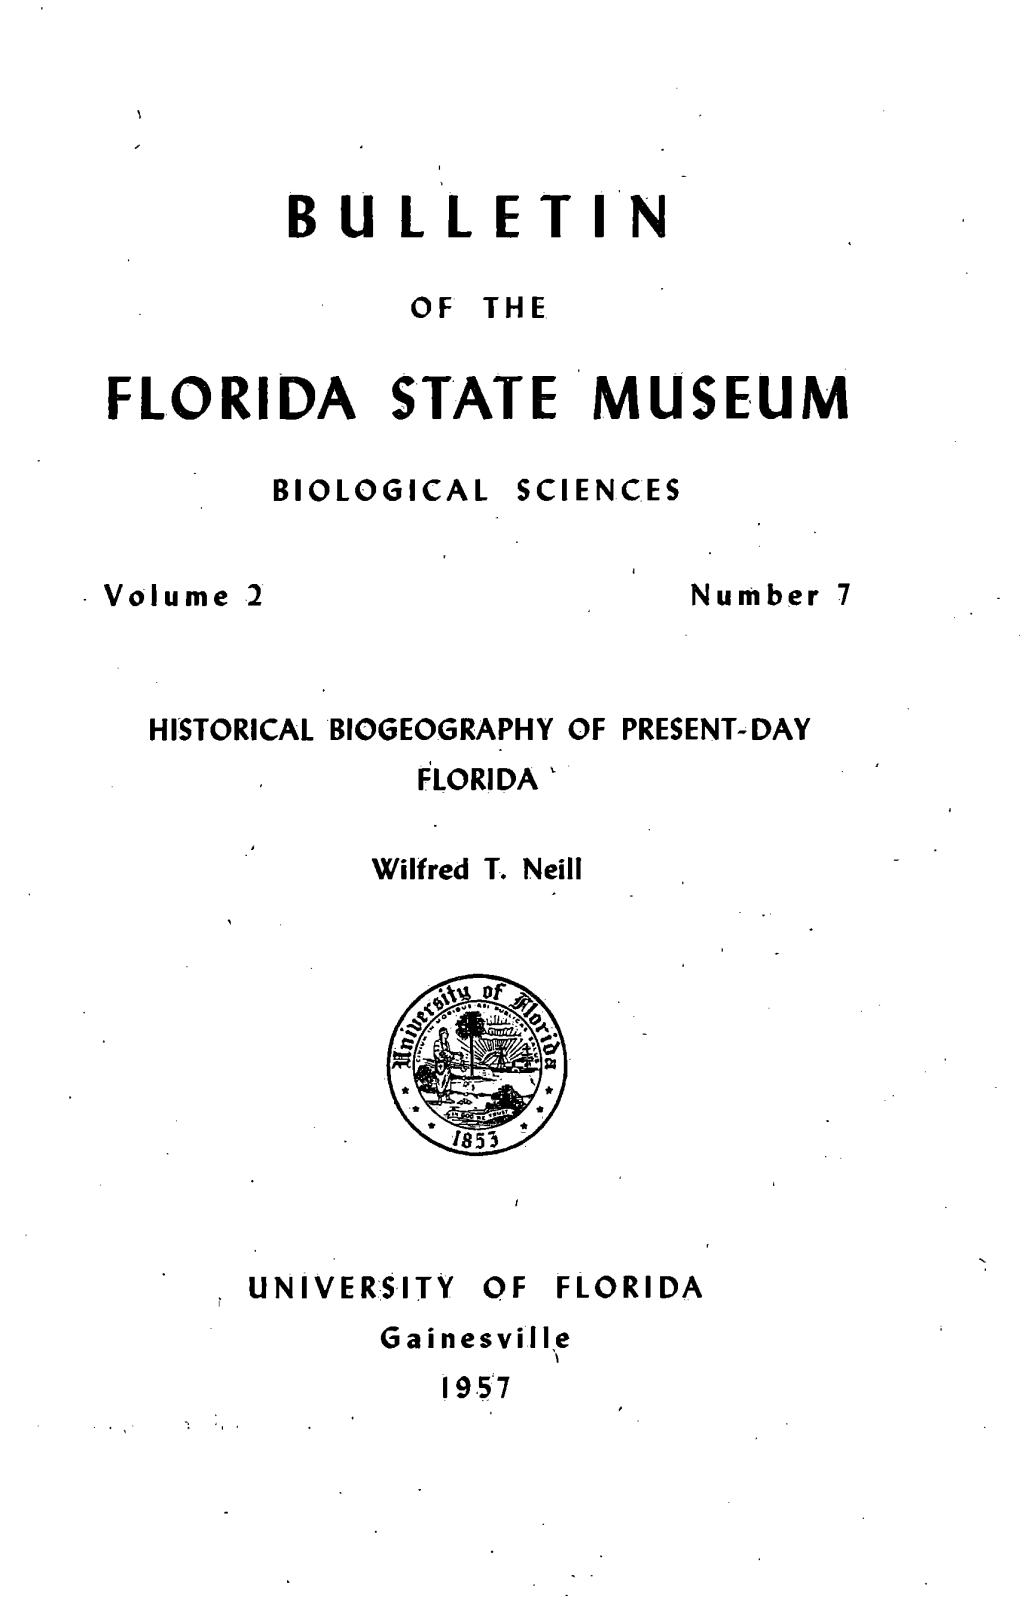 Florida State Museum